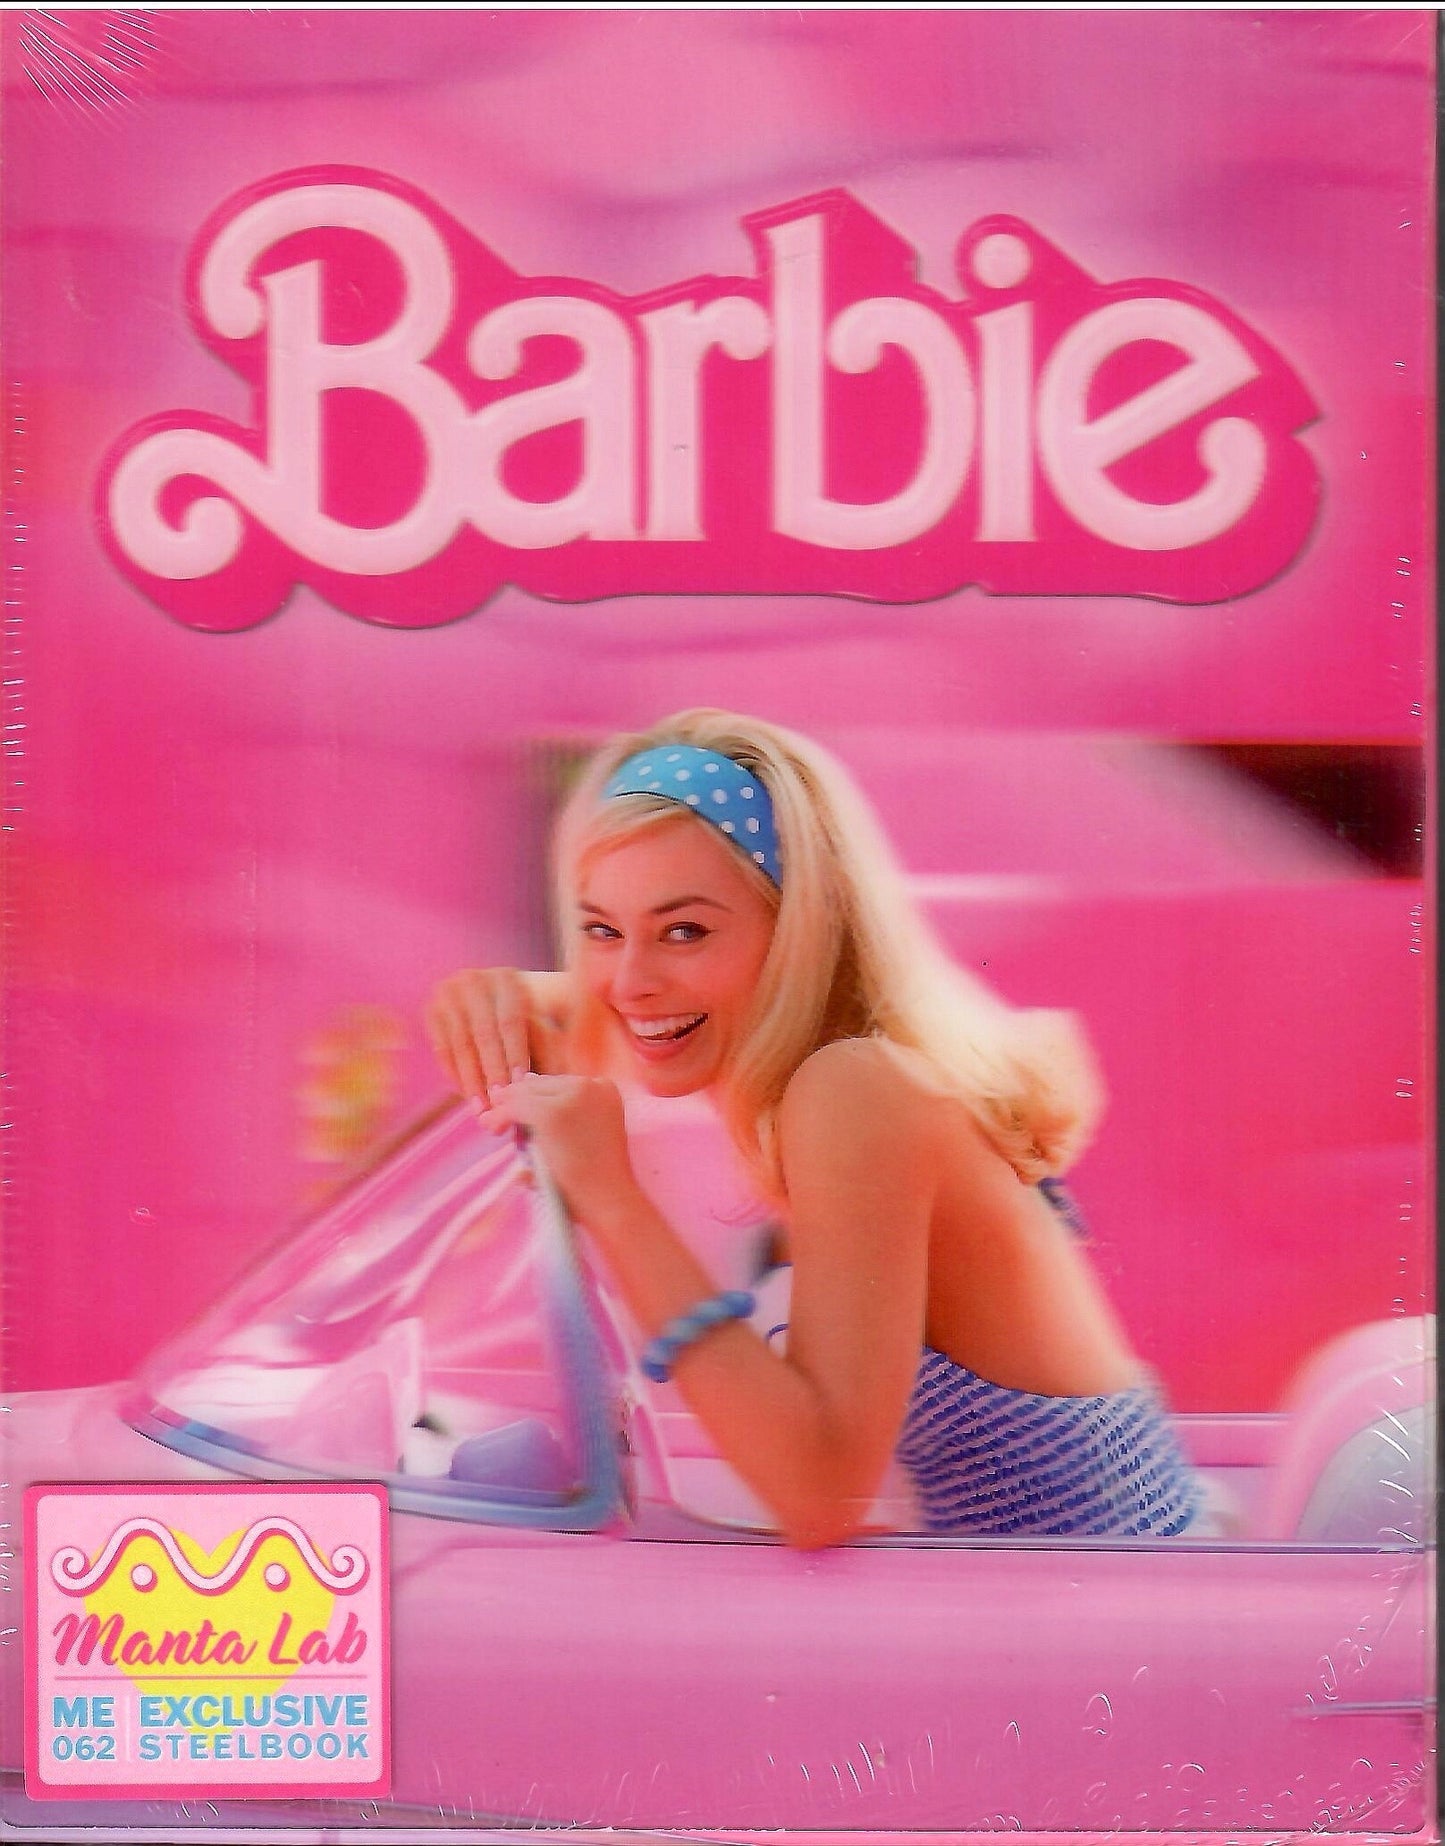 Barbie 4K Double Lentiuclar A SteelBook (ME#62)(Hong Kong)